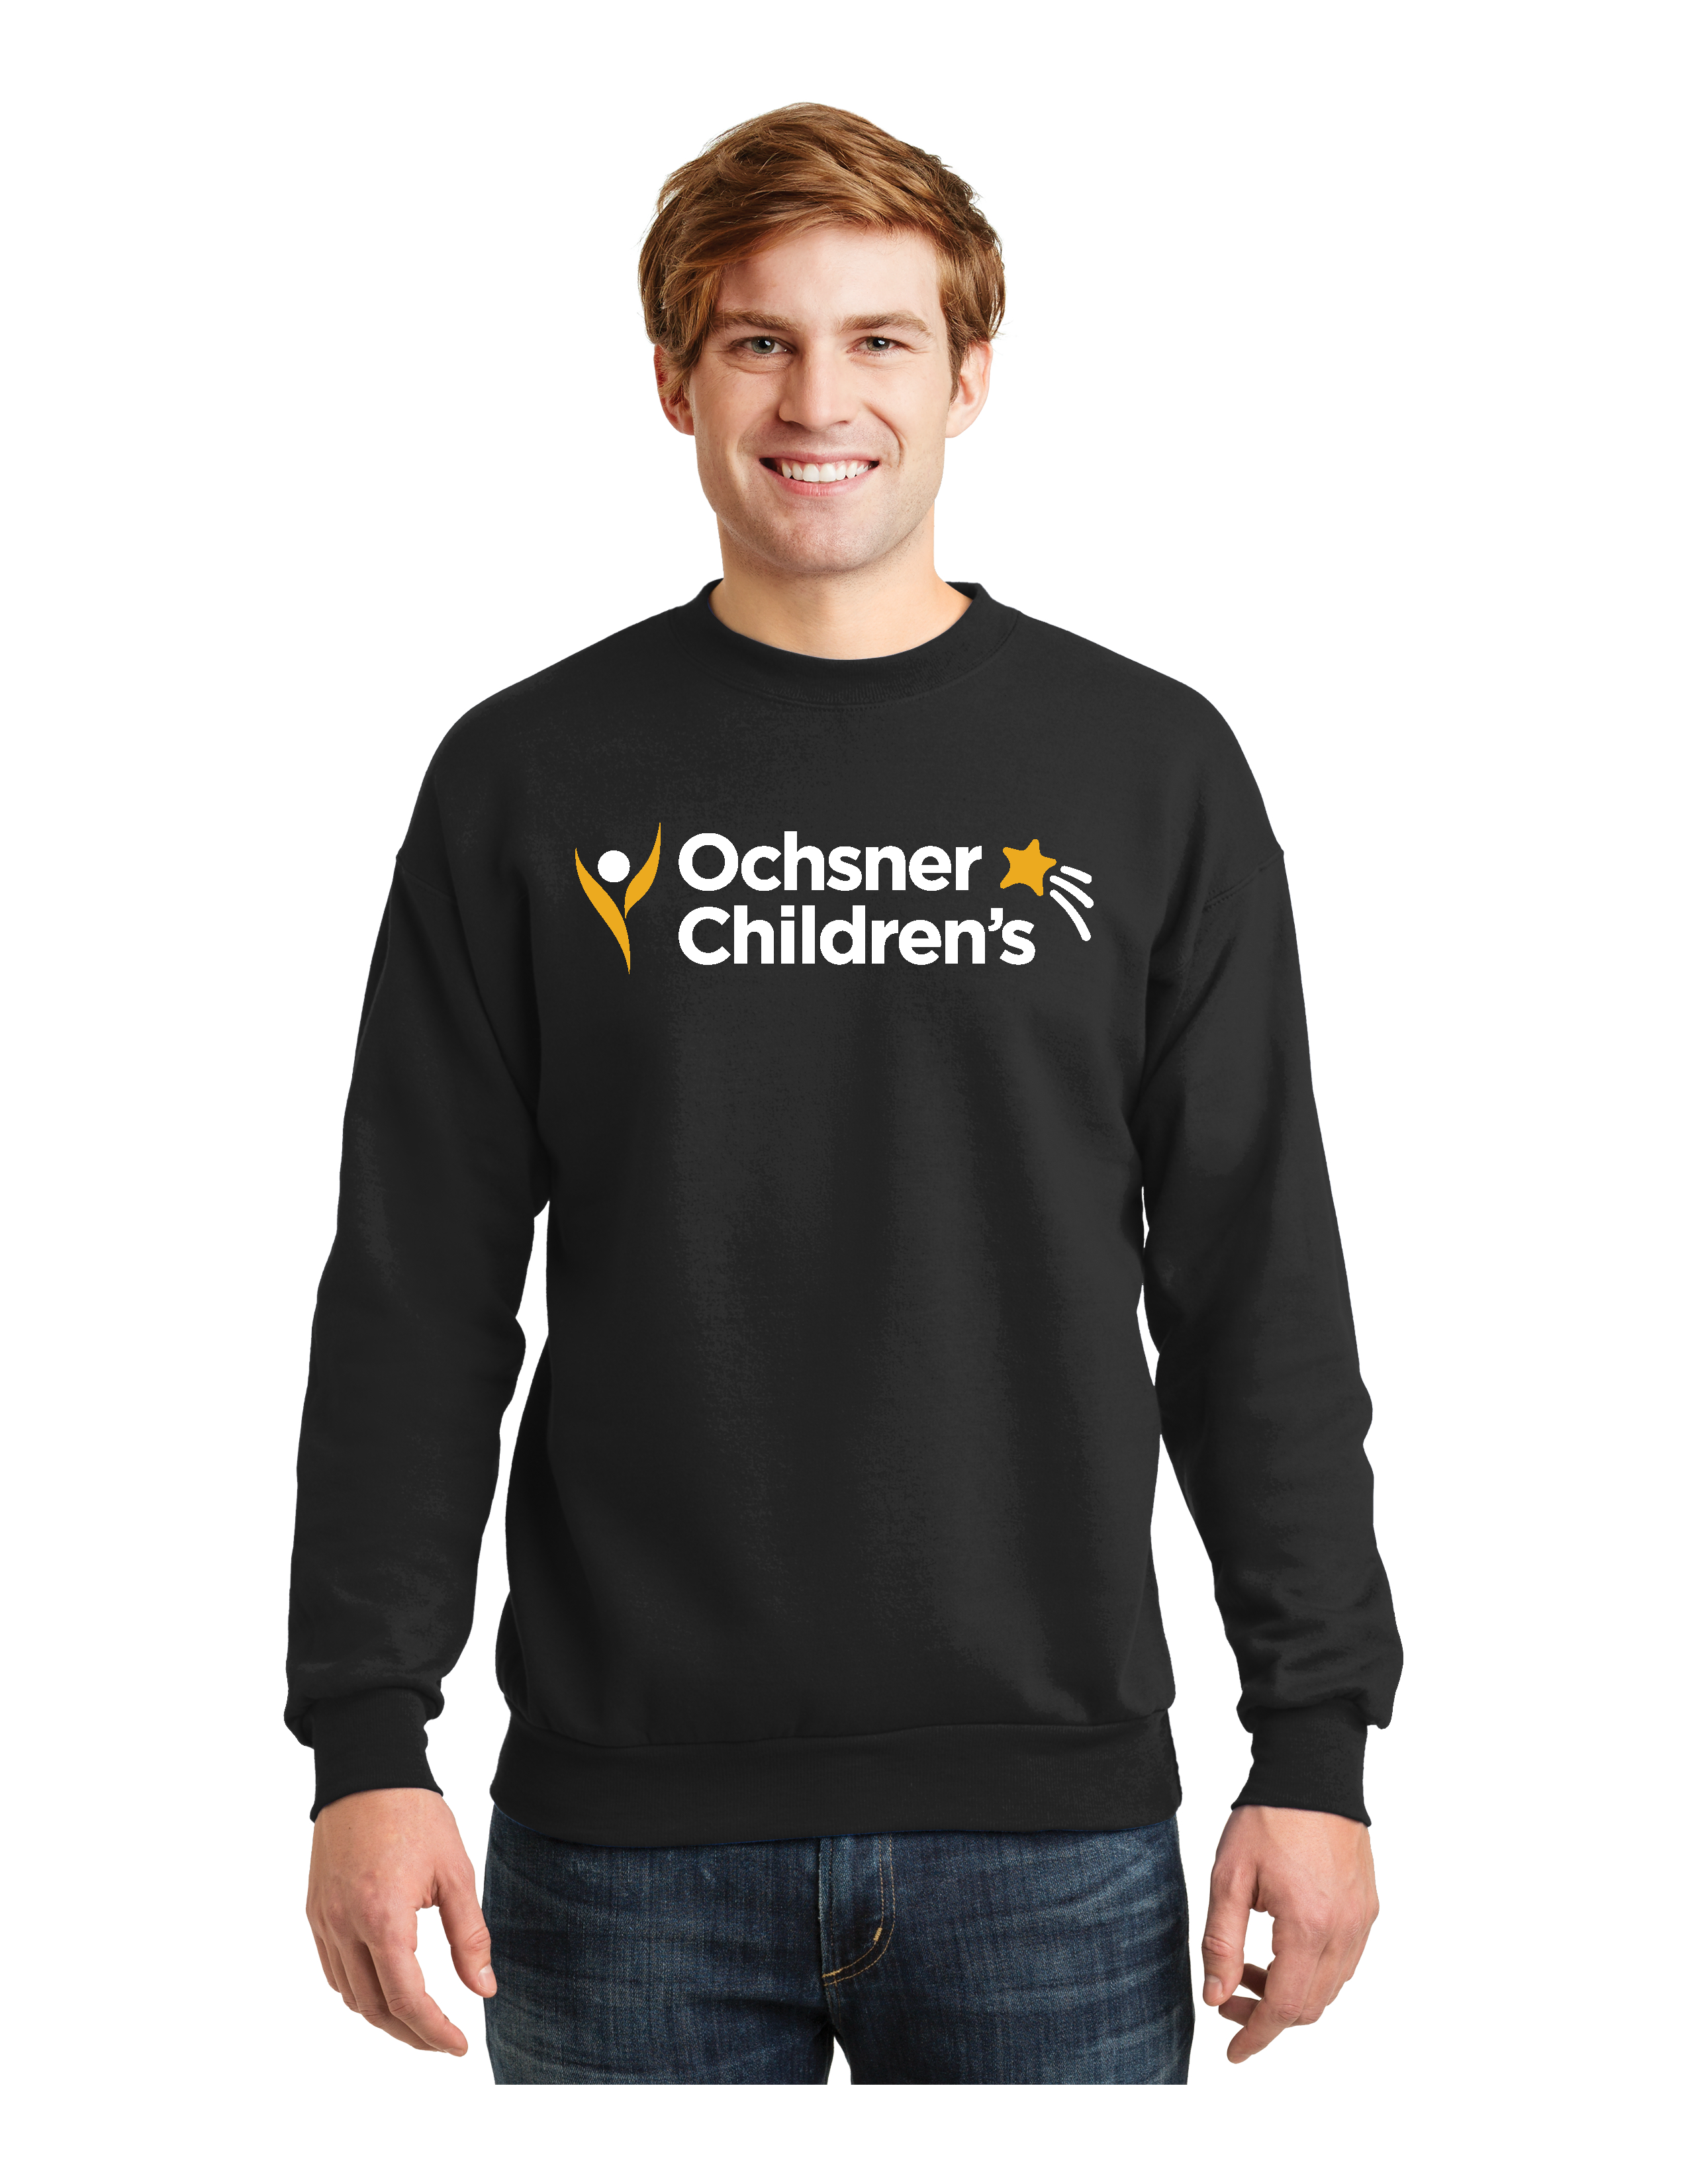 Ochsner Children's Screen-Print Sweatshirt, , large image number 1